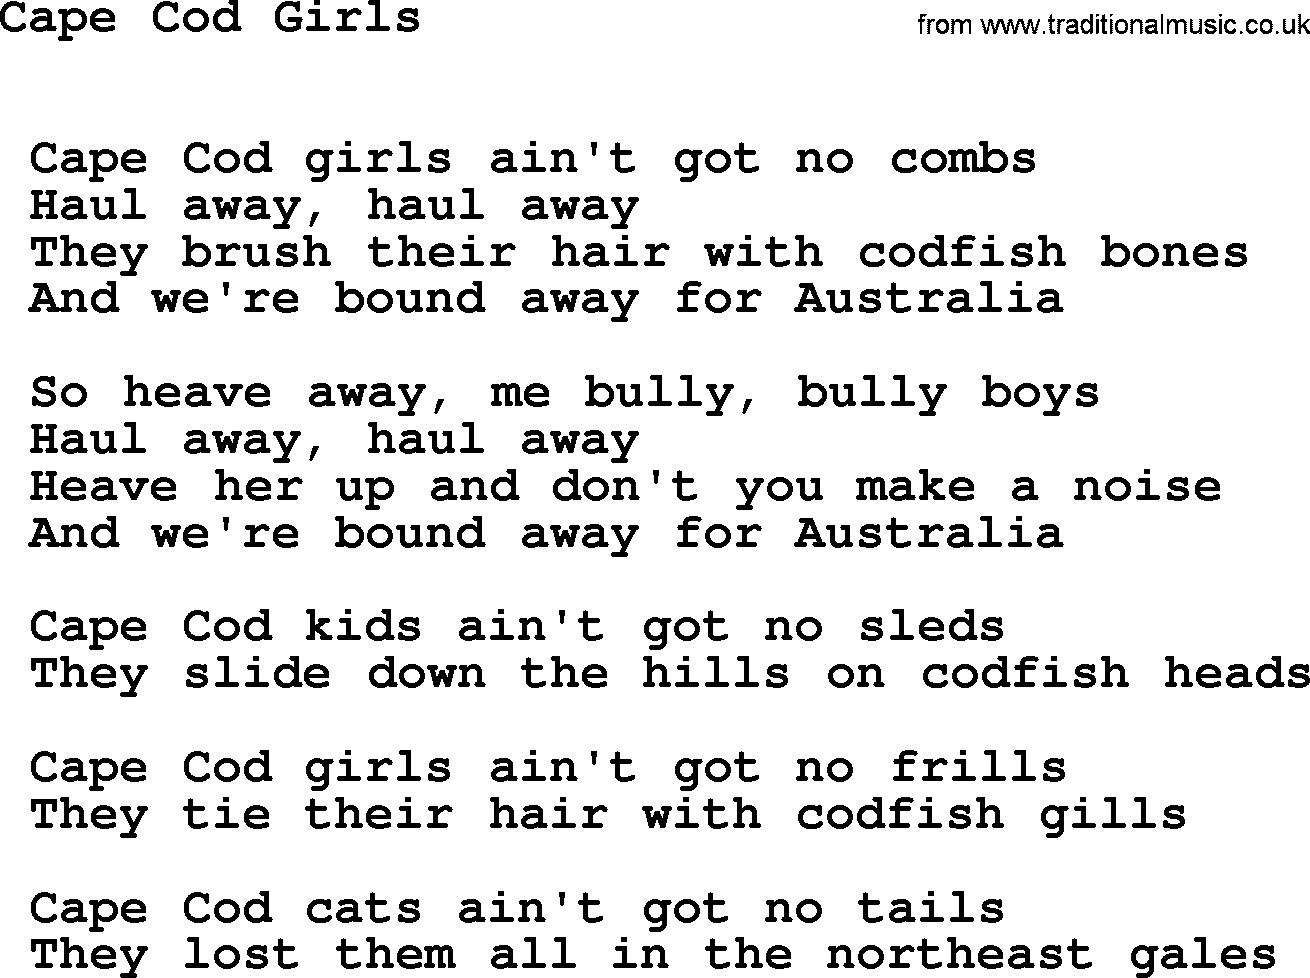 Sea Song or Shantie: Cape Cod Girls, lyrics